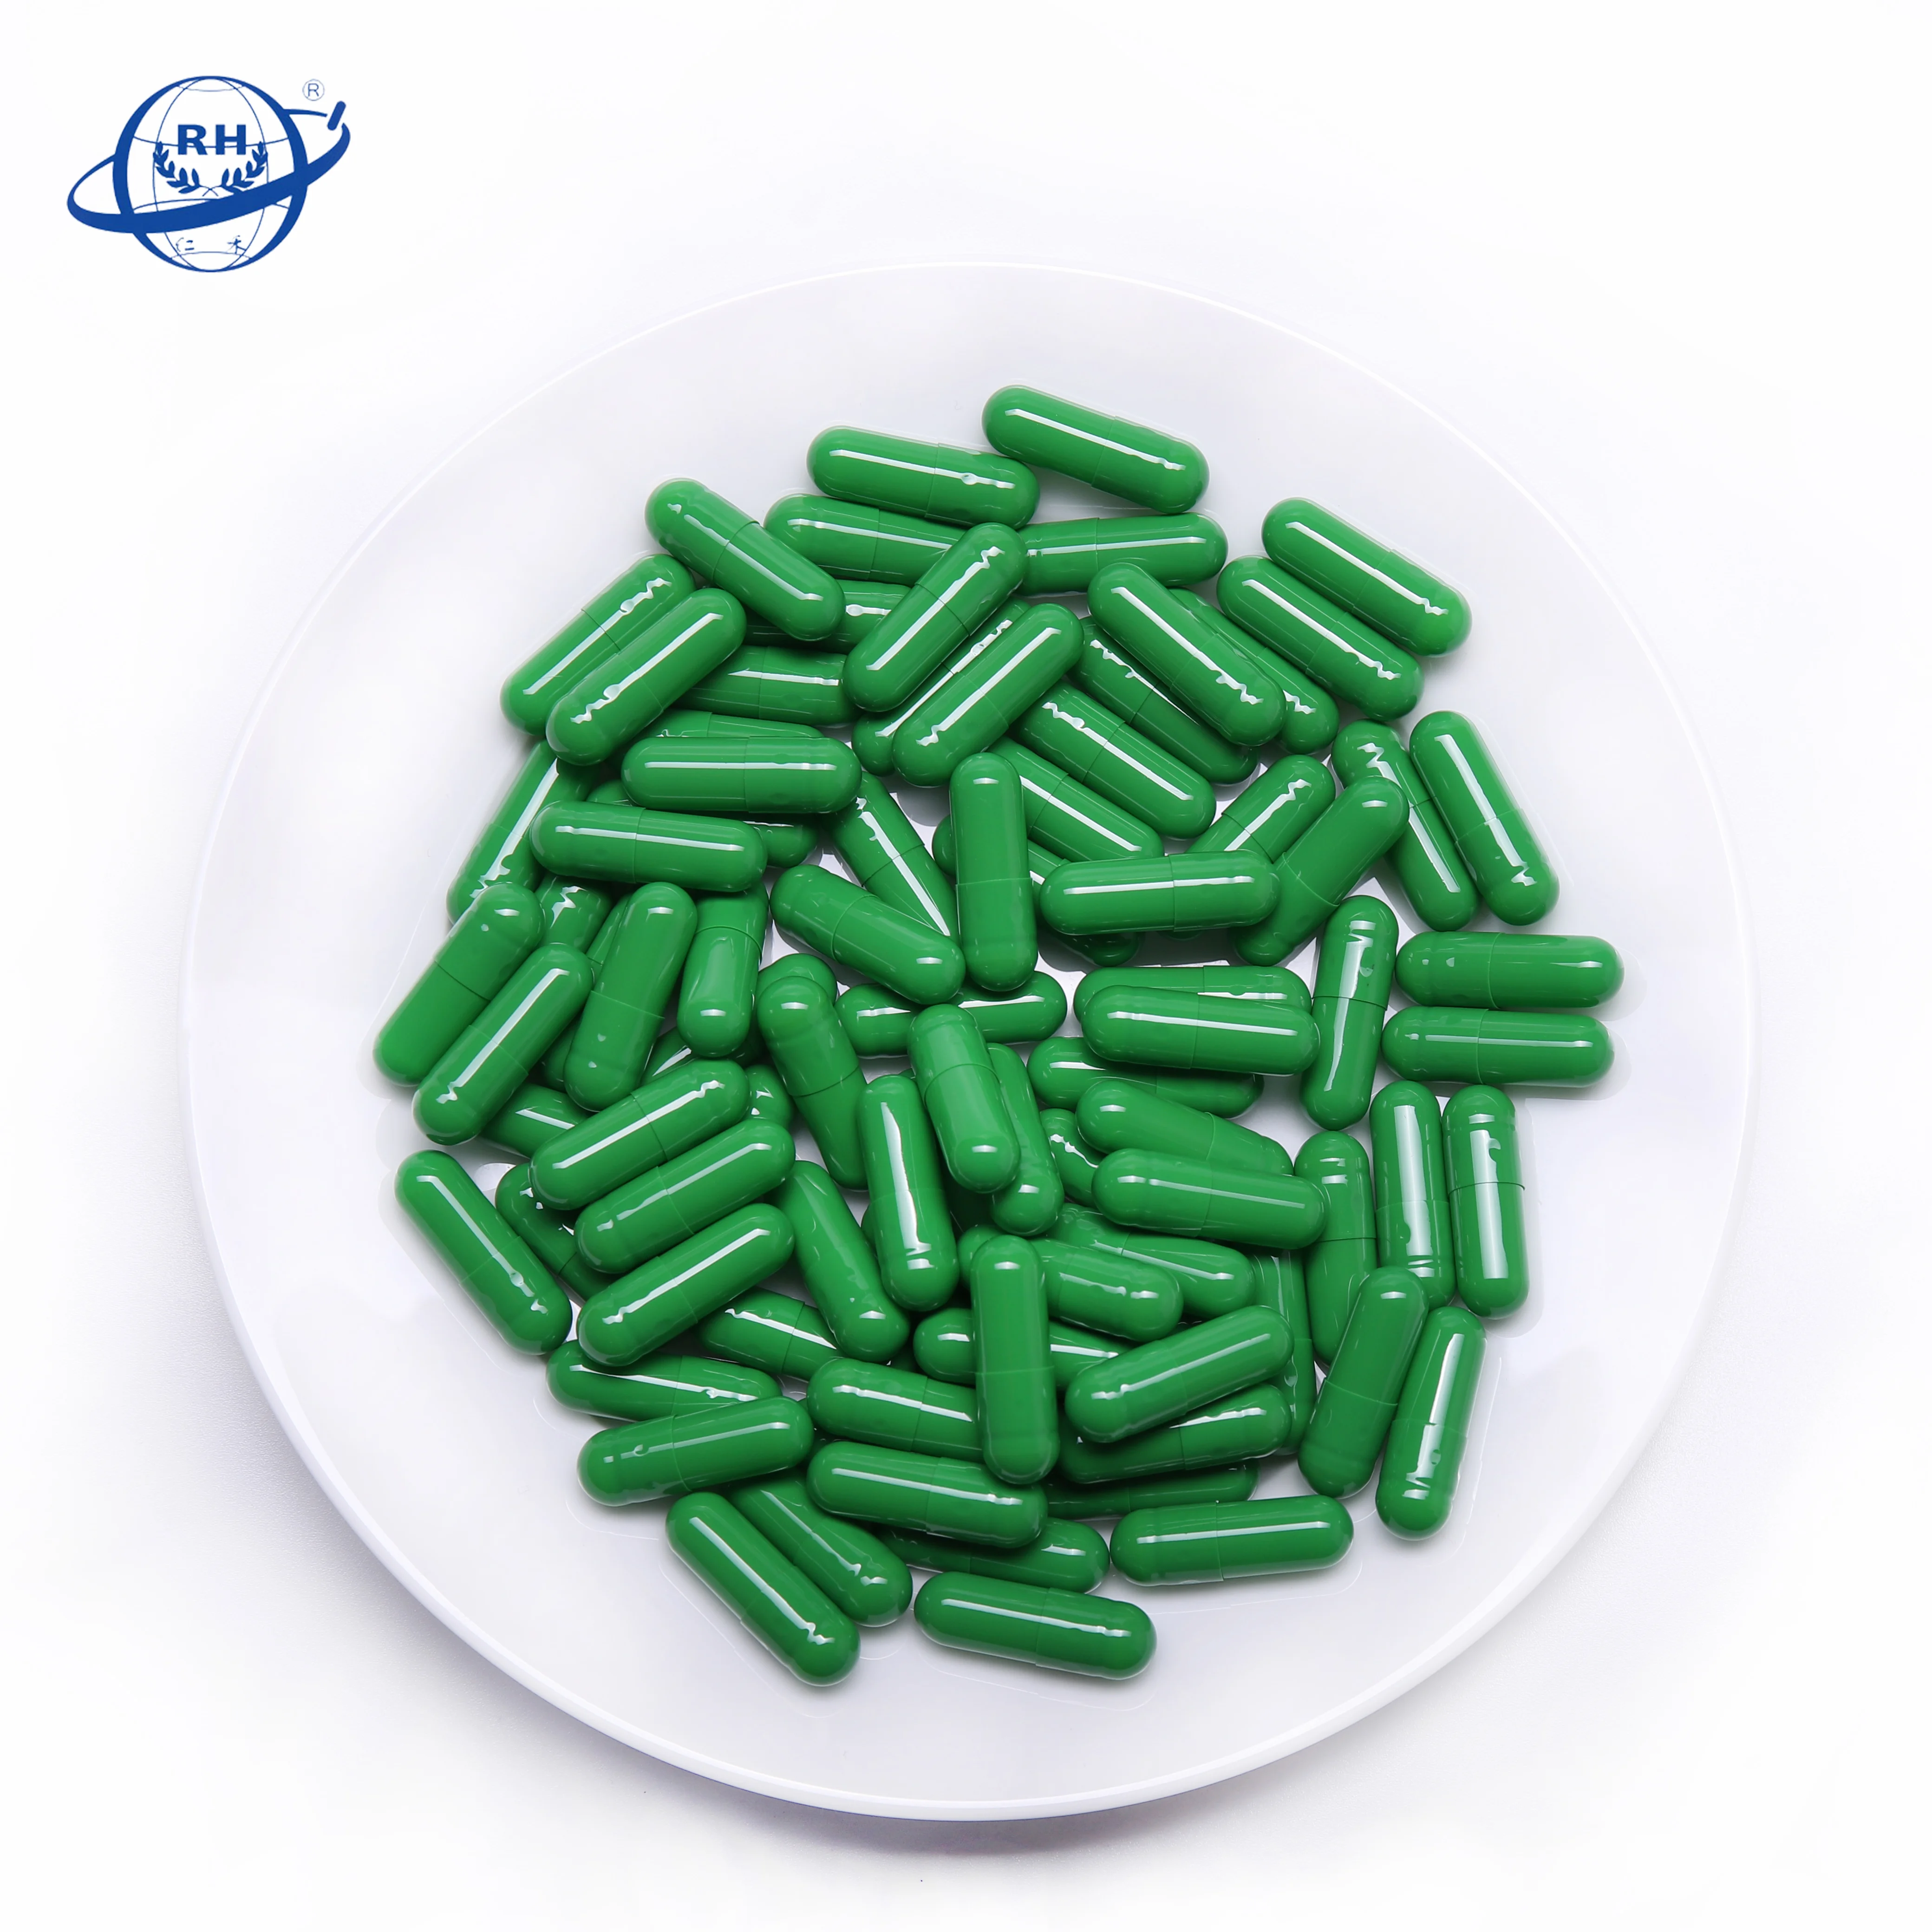 Green pill capsule empty gelatin capsule for drug